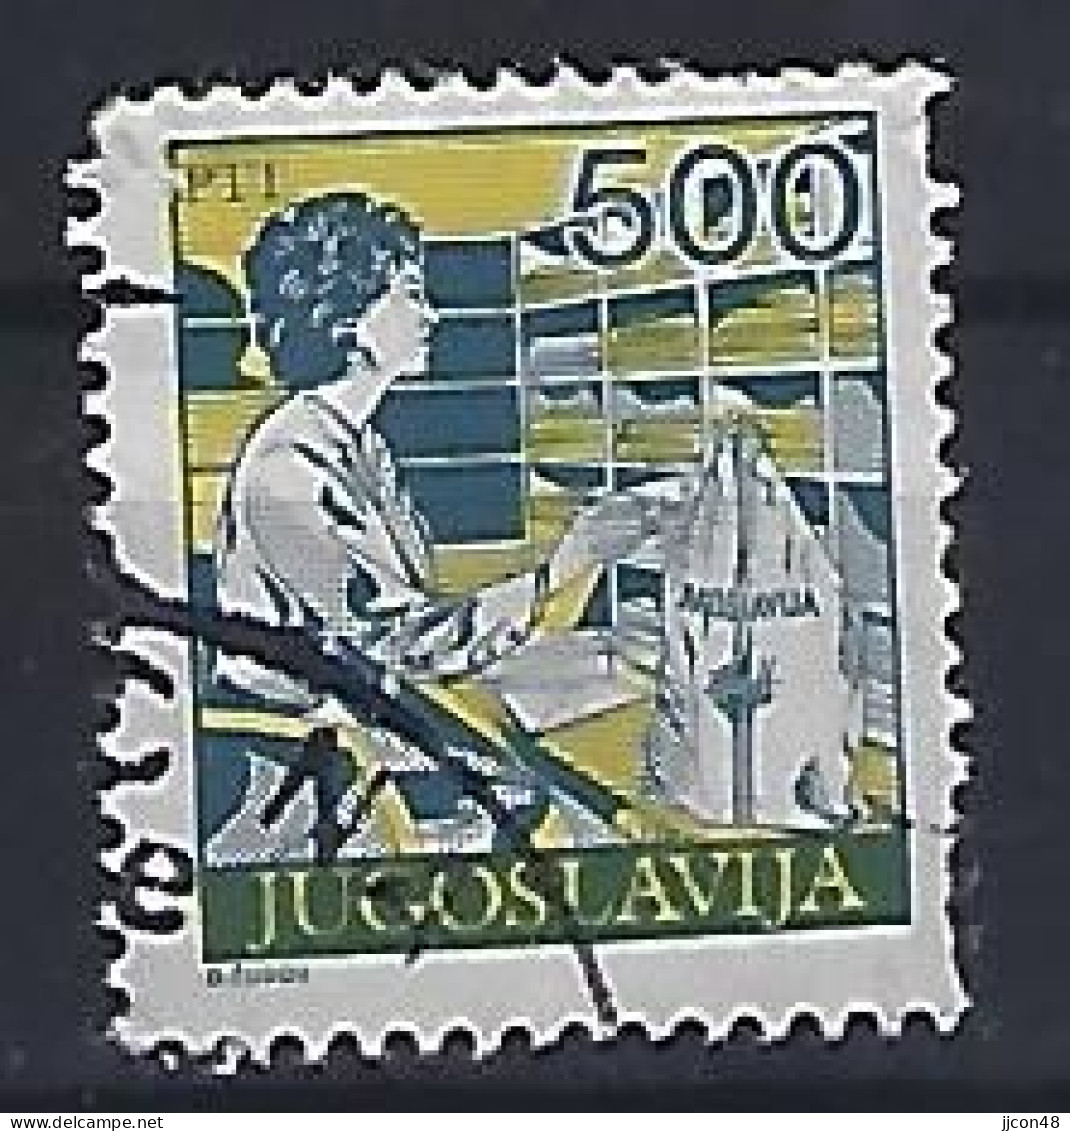 Jugoslavia 1988  Postdienst (o) Mi.2281 A - Oblitérés